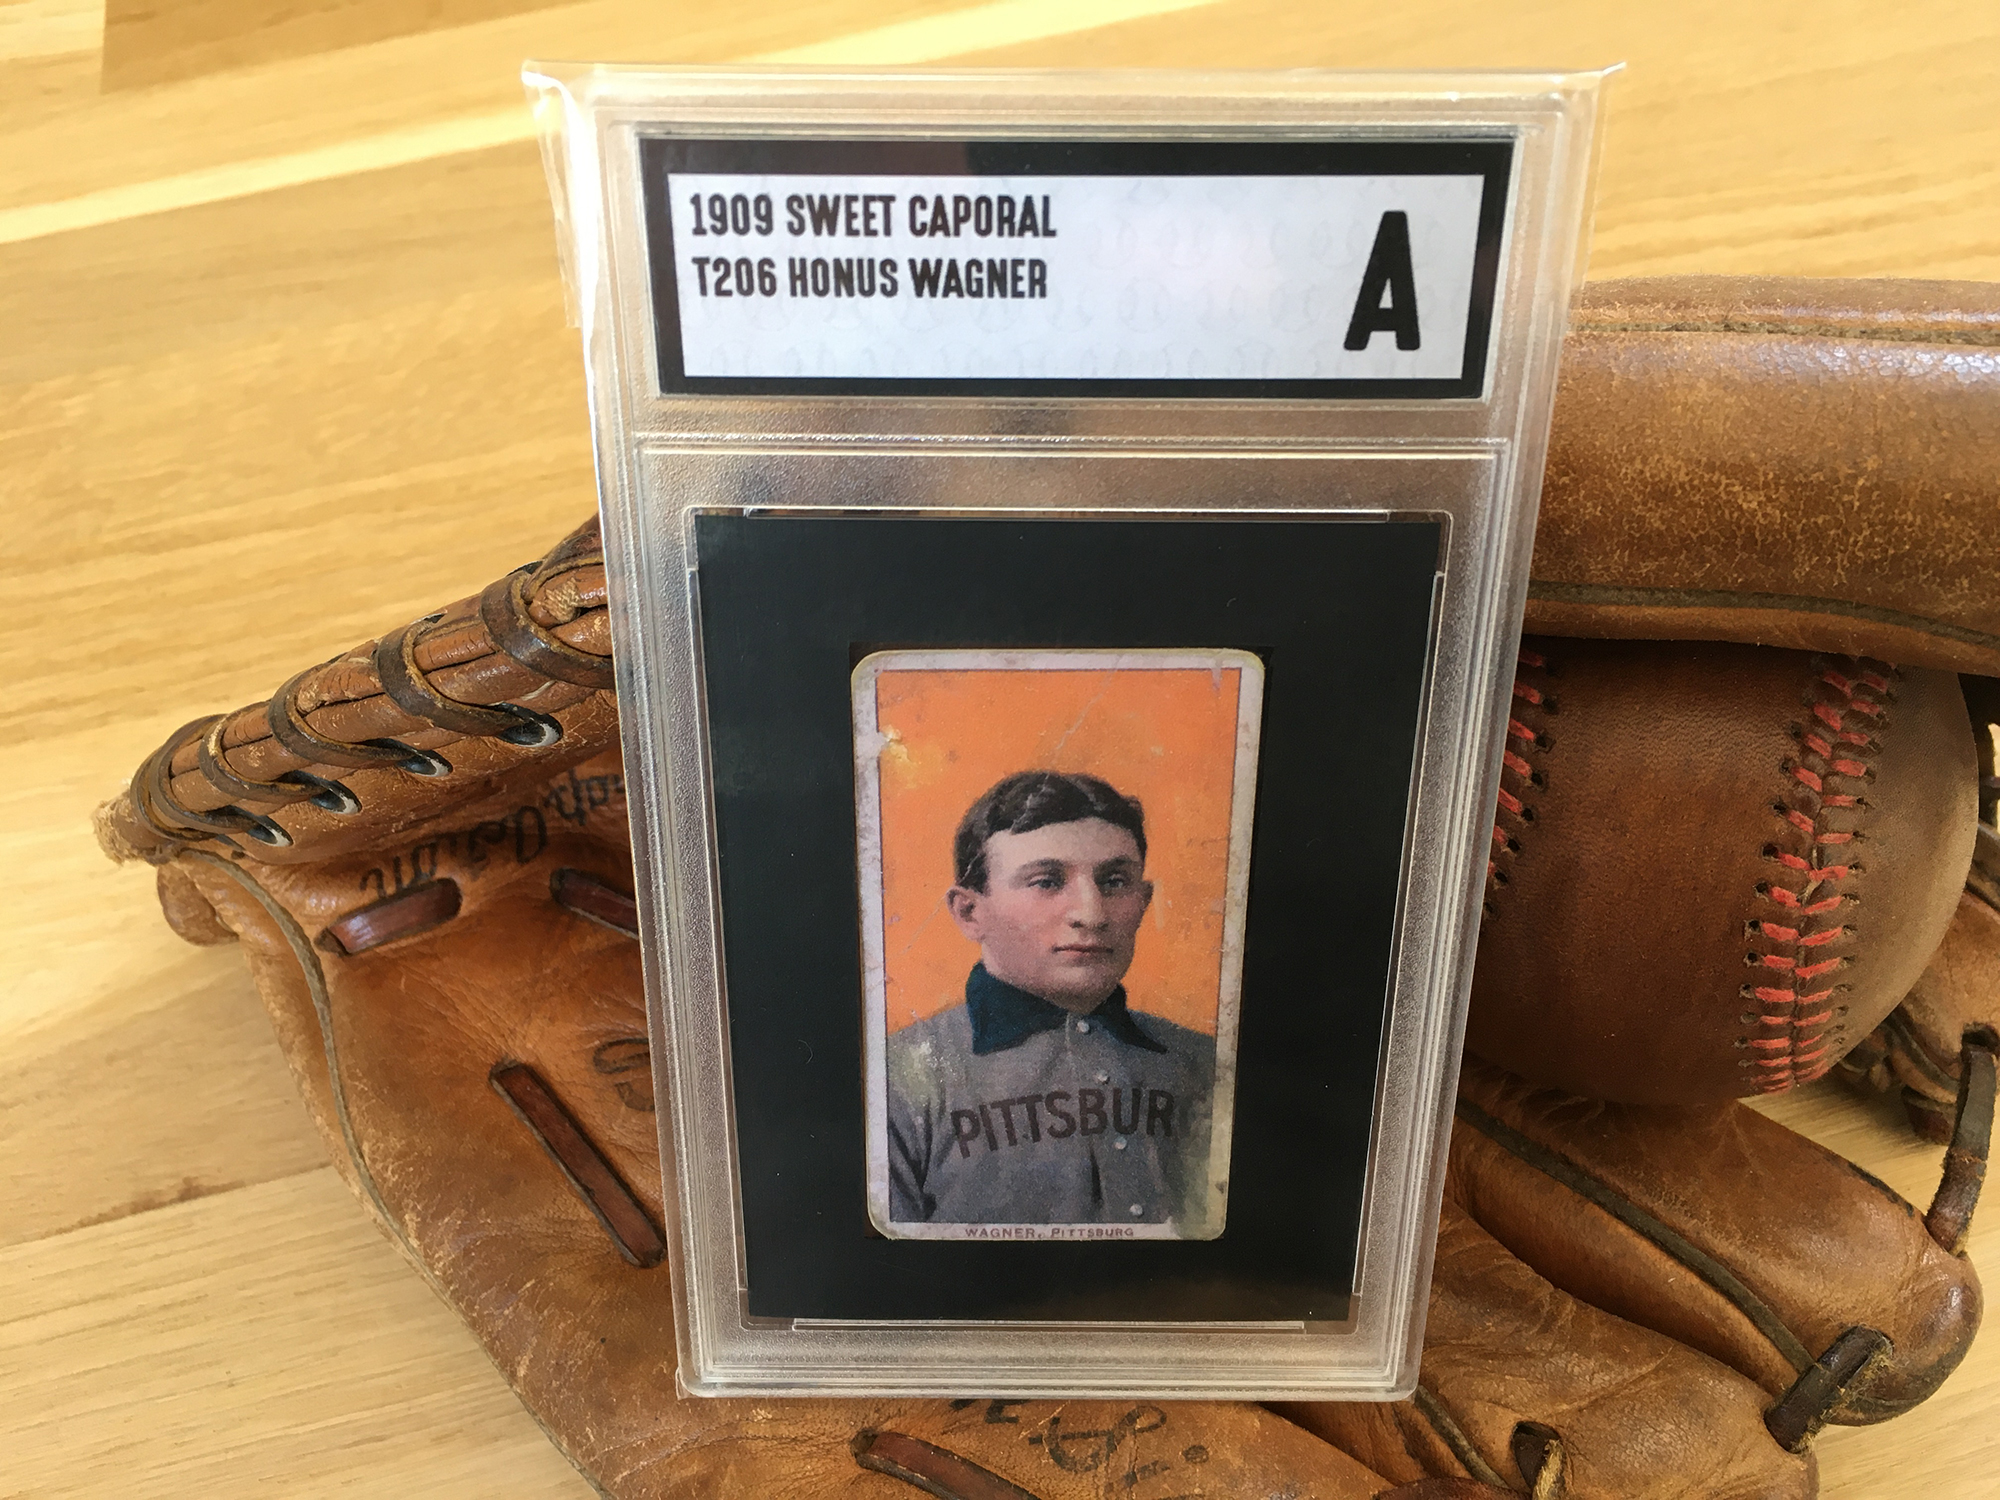 https://khristore.com/wp-content/uploads/2022/03/1909-HONUS-Wagner-T206-SWEET-CAPORAL-Baseball-card-Vintage-aged-REPRINT-REPRO-khristore-1.jpg